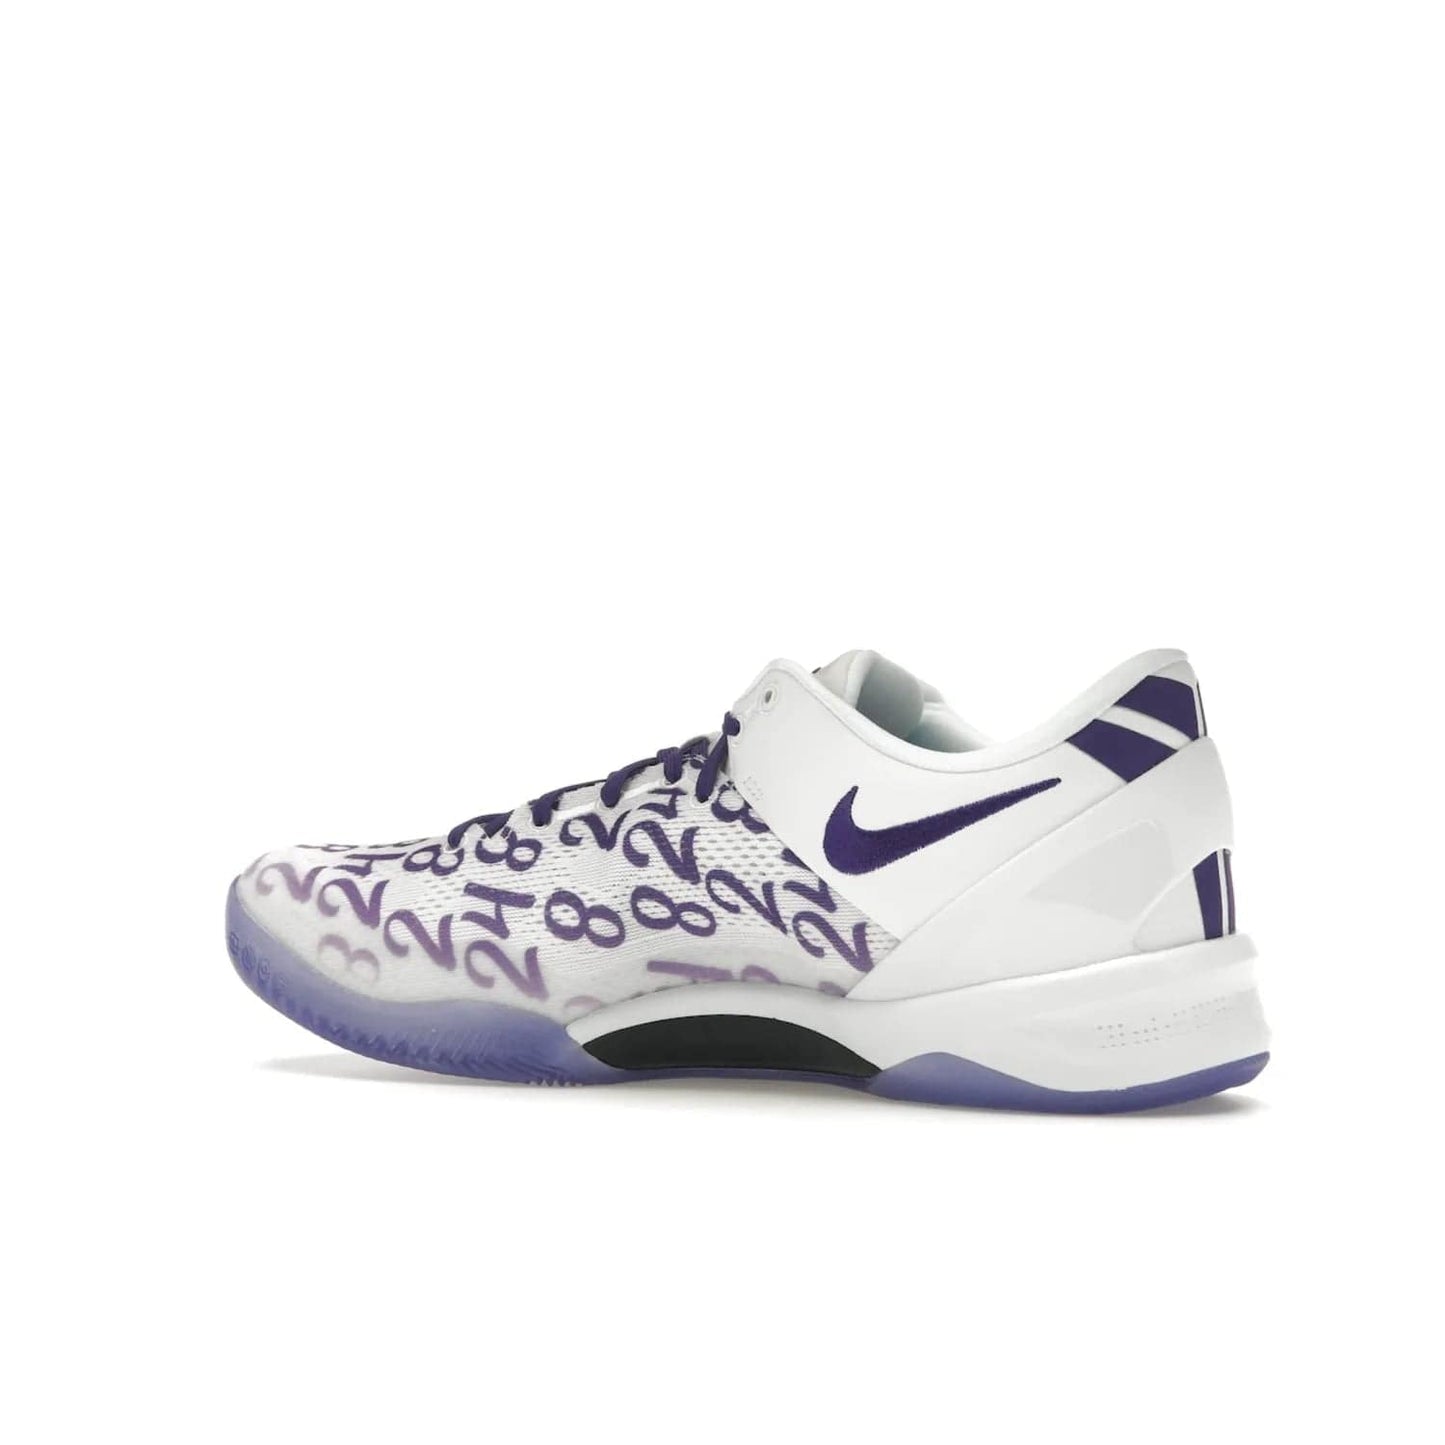 Nike Kobe 8 Protro Court Purple - Image 22 - Only at www.BallersClubKickz.com - 